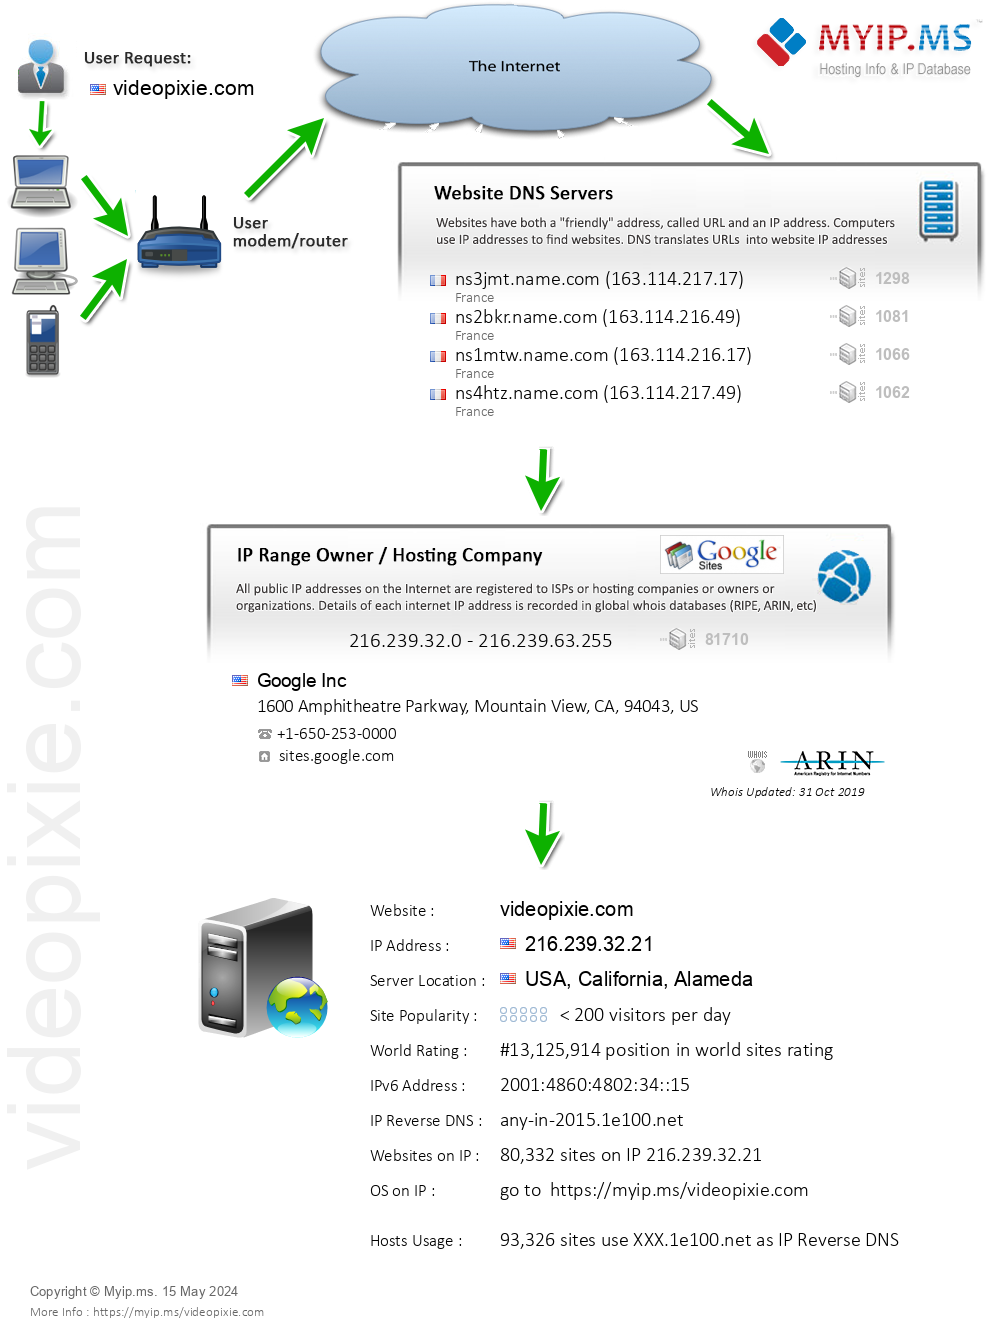 Videopixie.com - Website Hosting Visual IP Diagram